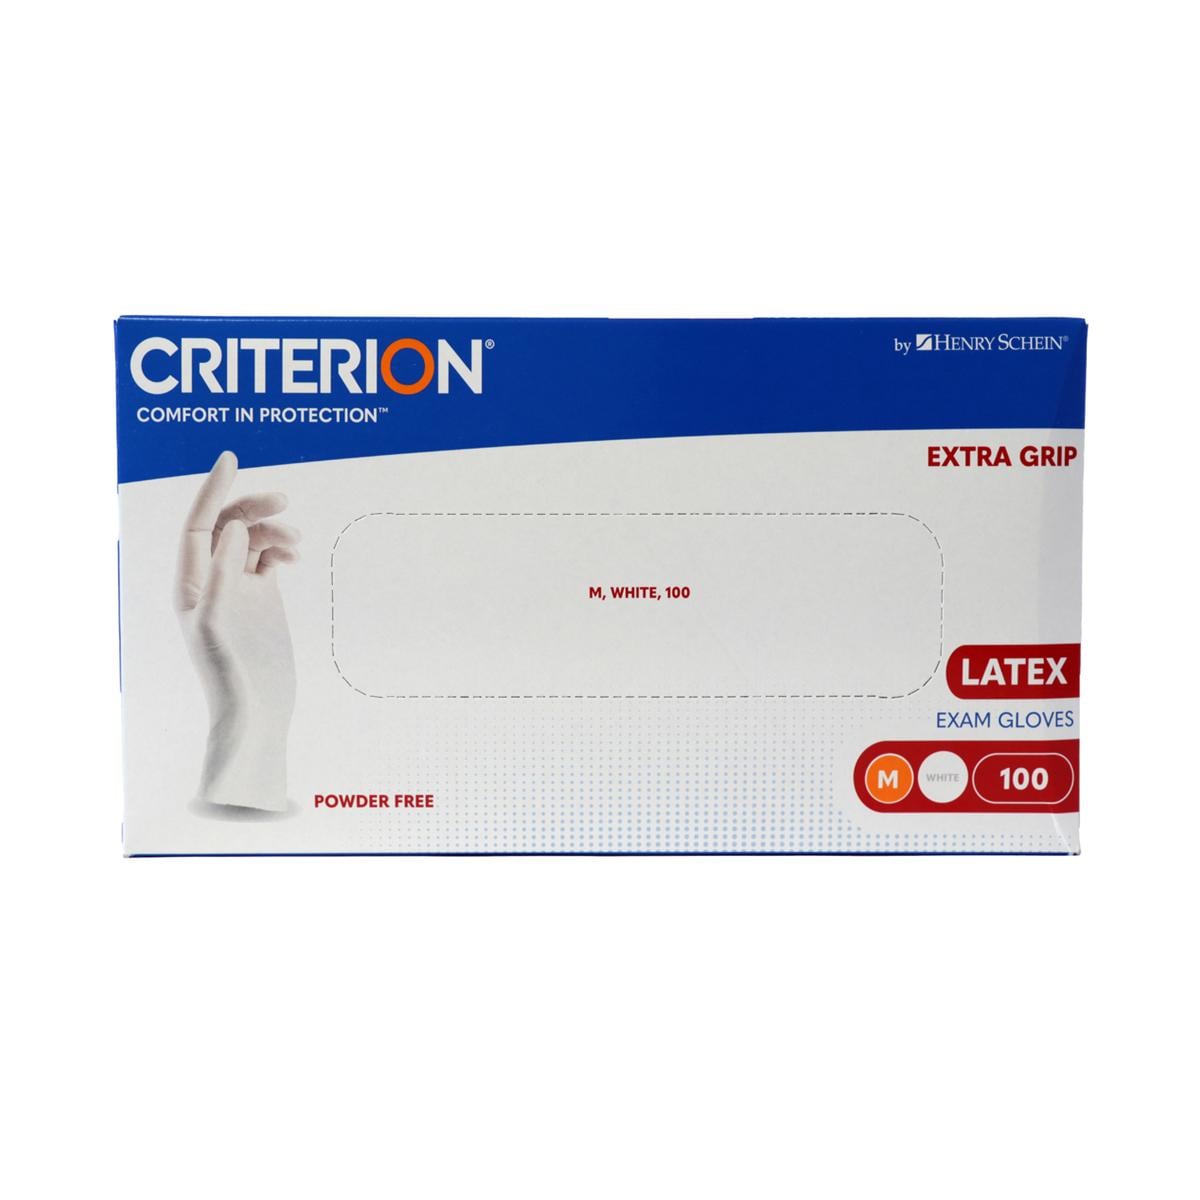 Criterion Grip Latex Powderfree Gloves - M